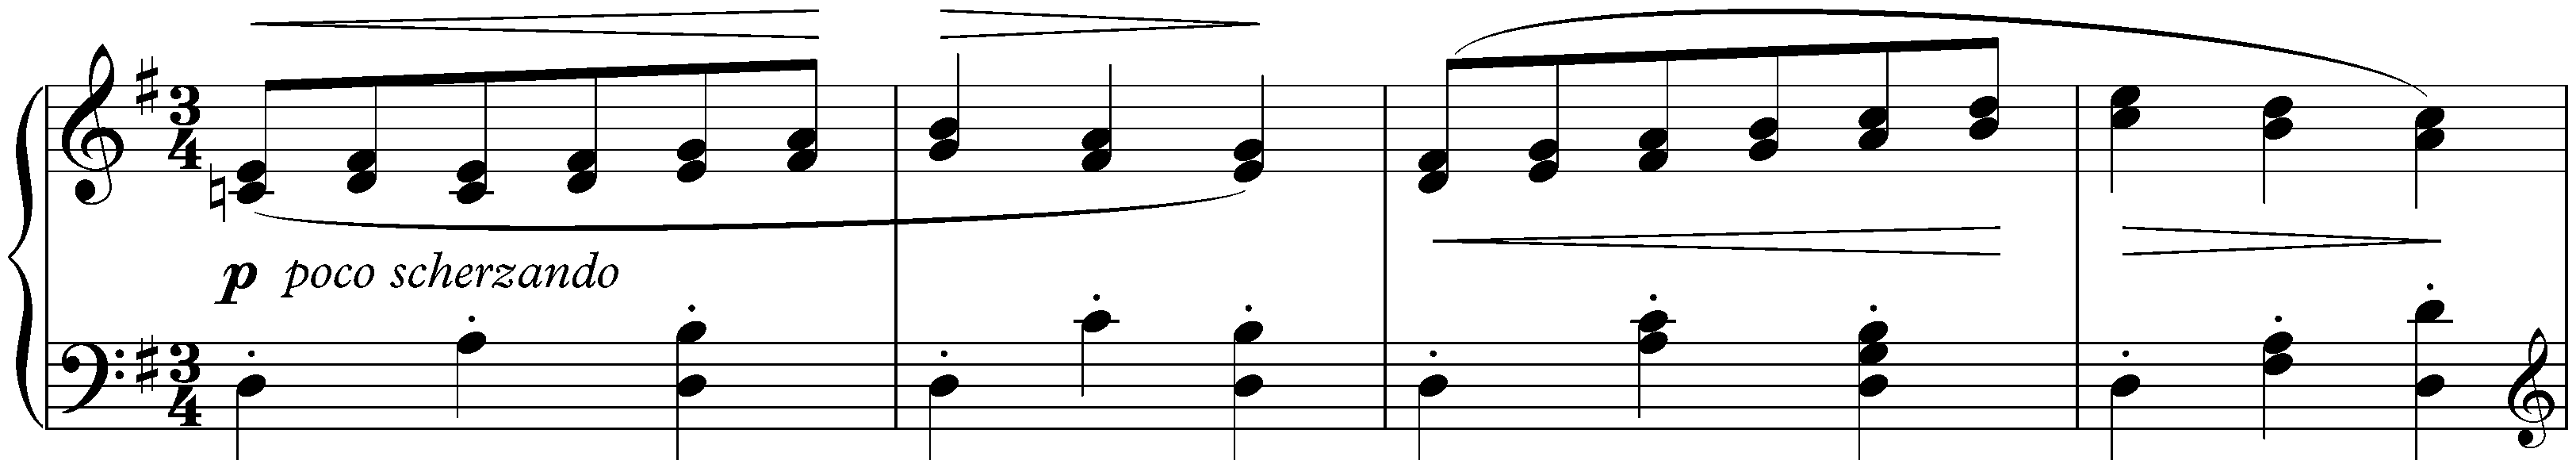 Sixteen Waltzes, op. 39; 10. G major (simplified version)